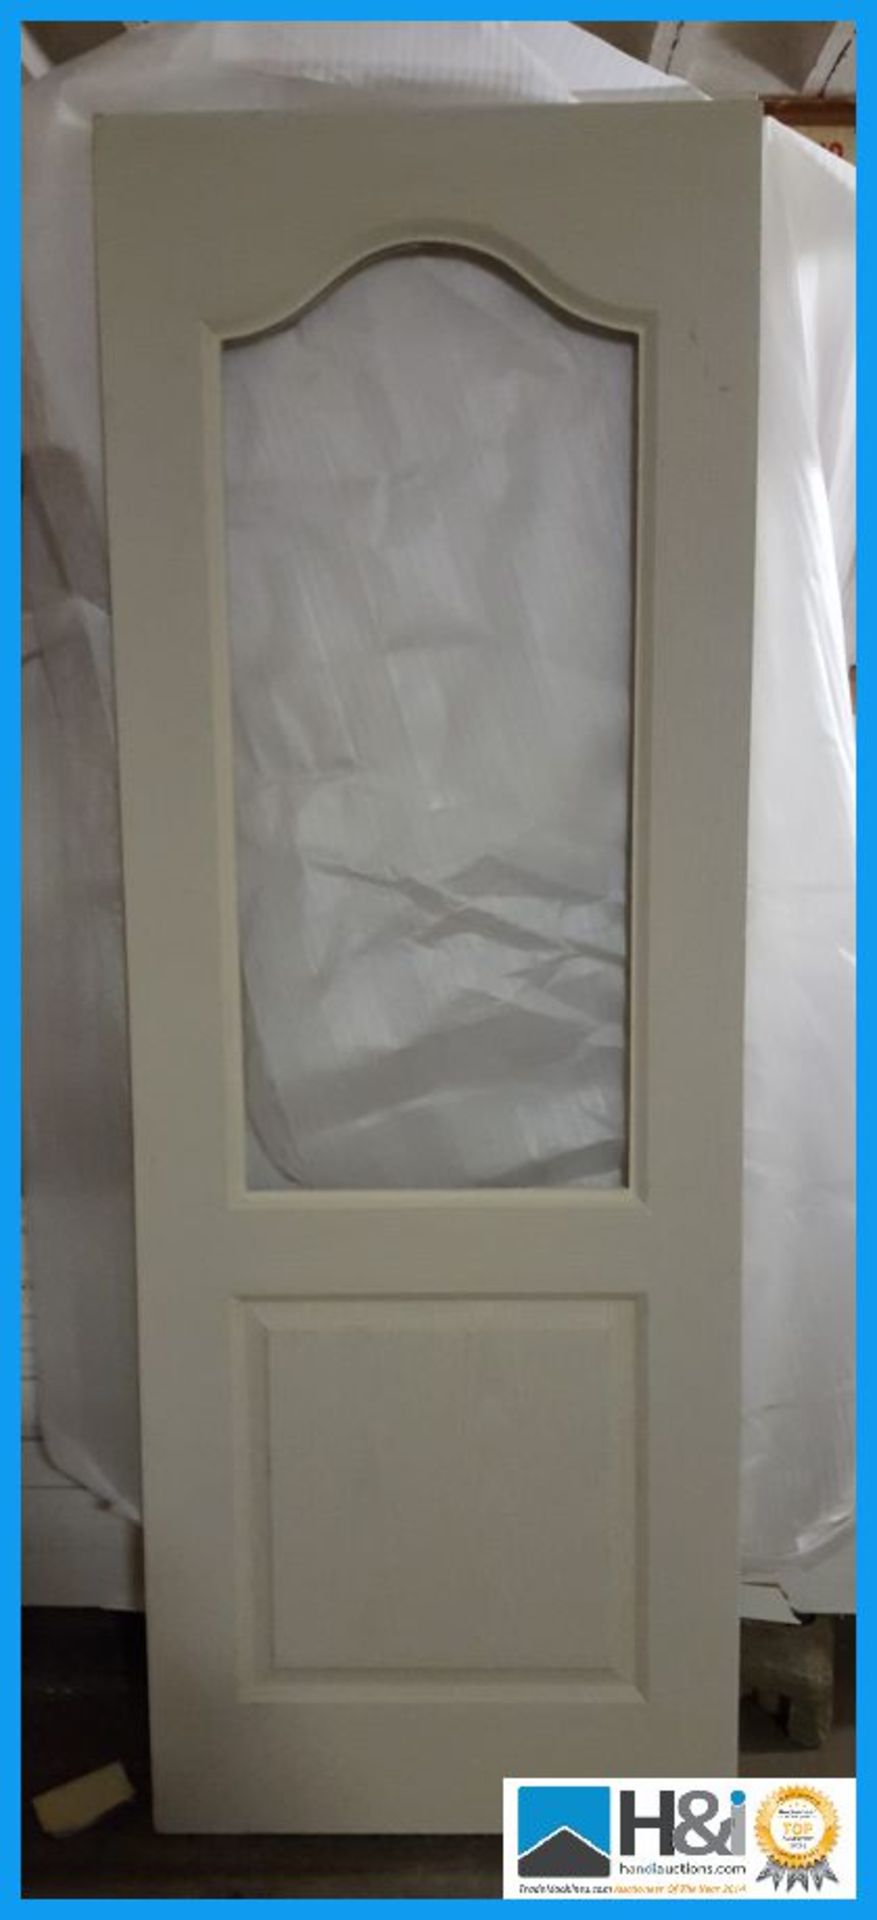 Classy Glass (unglazed) interior door. Size: 78 x 28 inch. RRP £79.99. Appraisal: Viewing